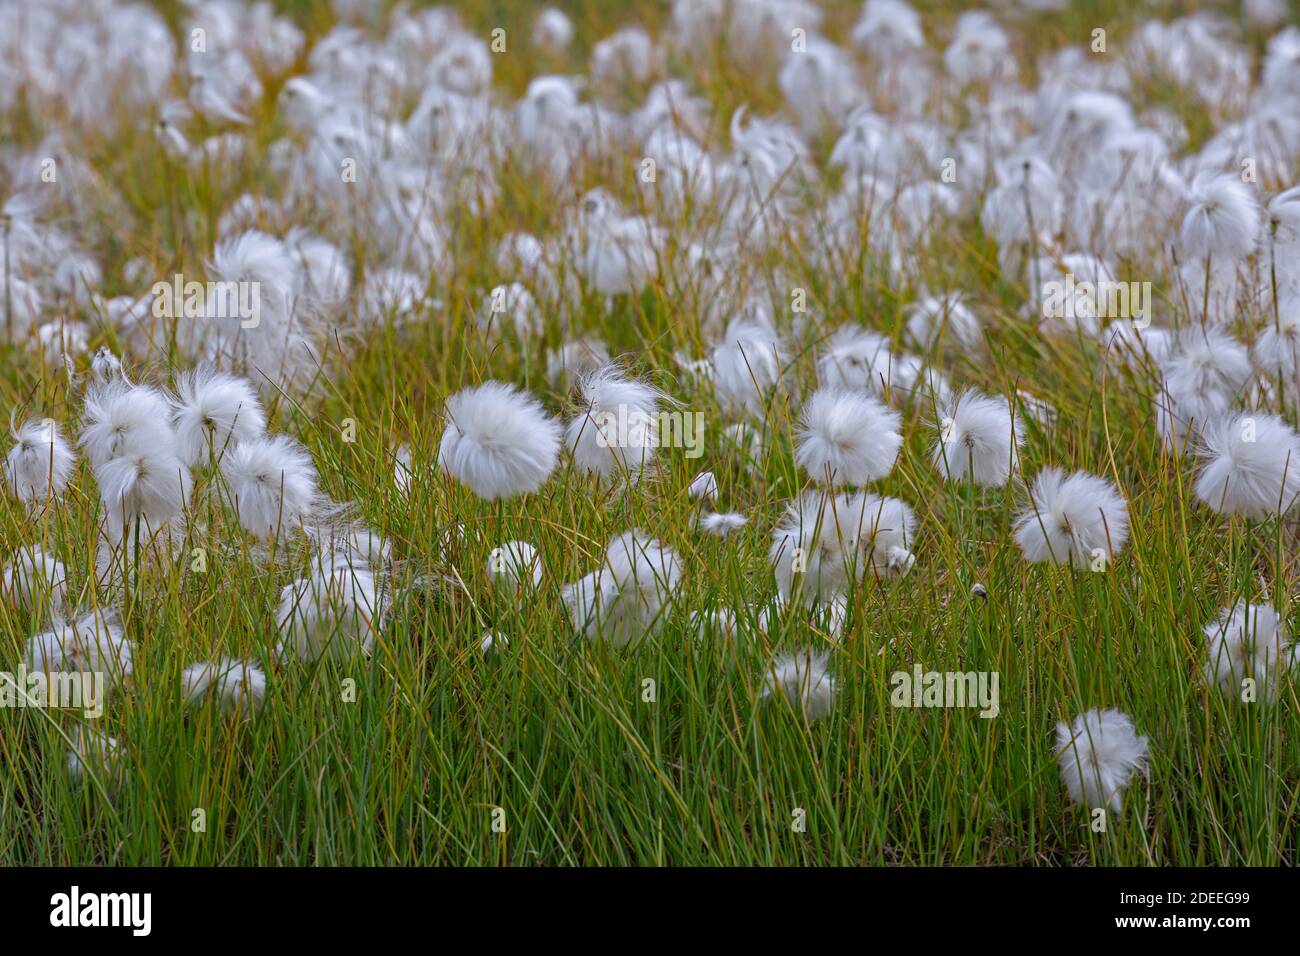 Scheuchzer's cottongrass / white cottongrass (Eriophorum scheuchzeri) showing white cottony flowers Stock Photo